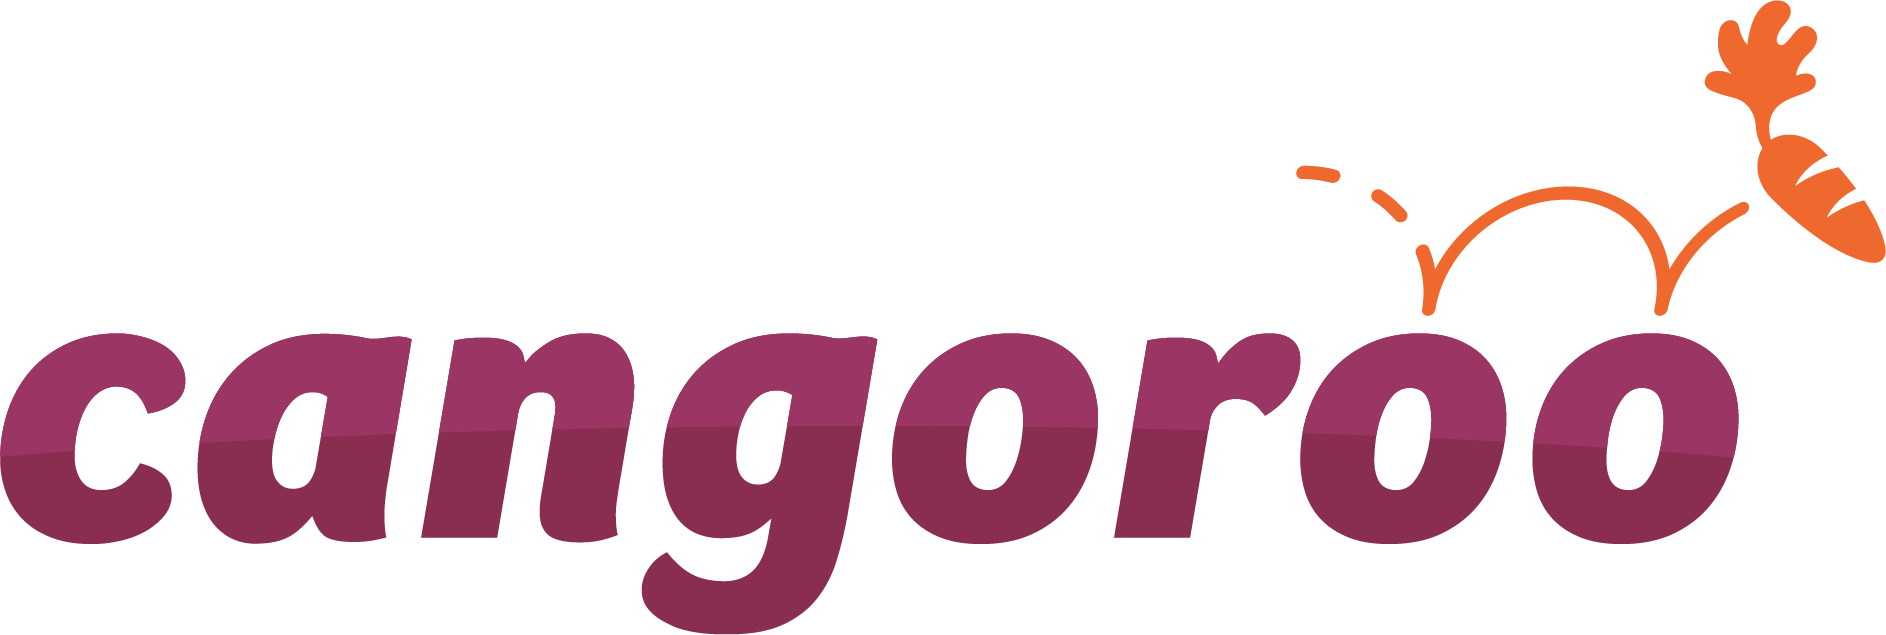 logo Cangoroo